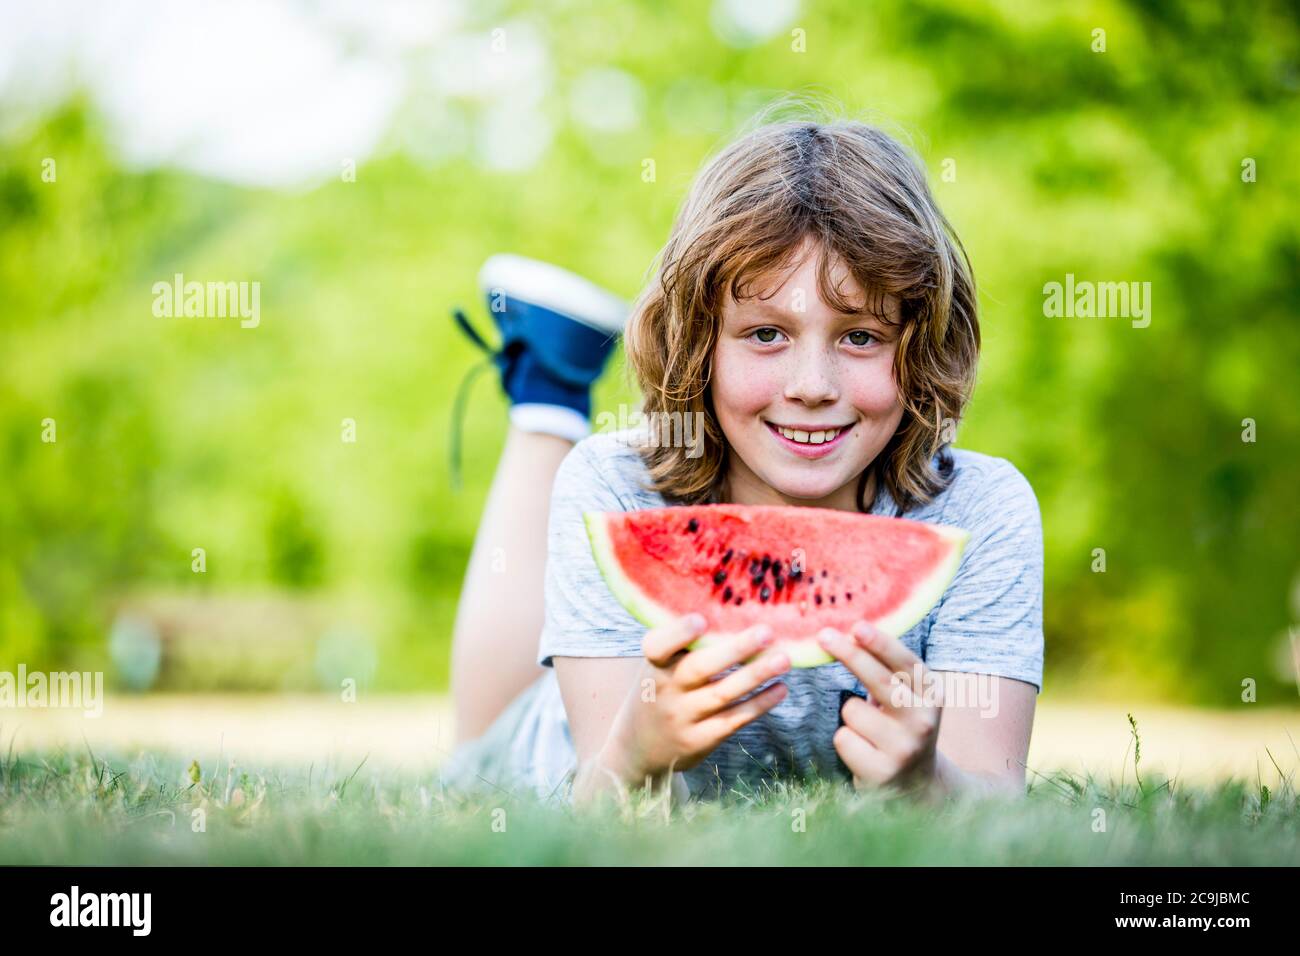 Junge hält Wassermelone, während er im Park liegt, lächelt, Porträt. Stockfoto